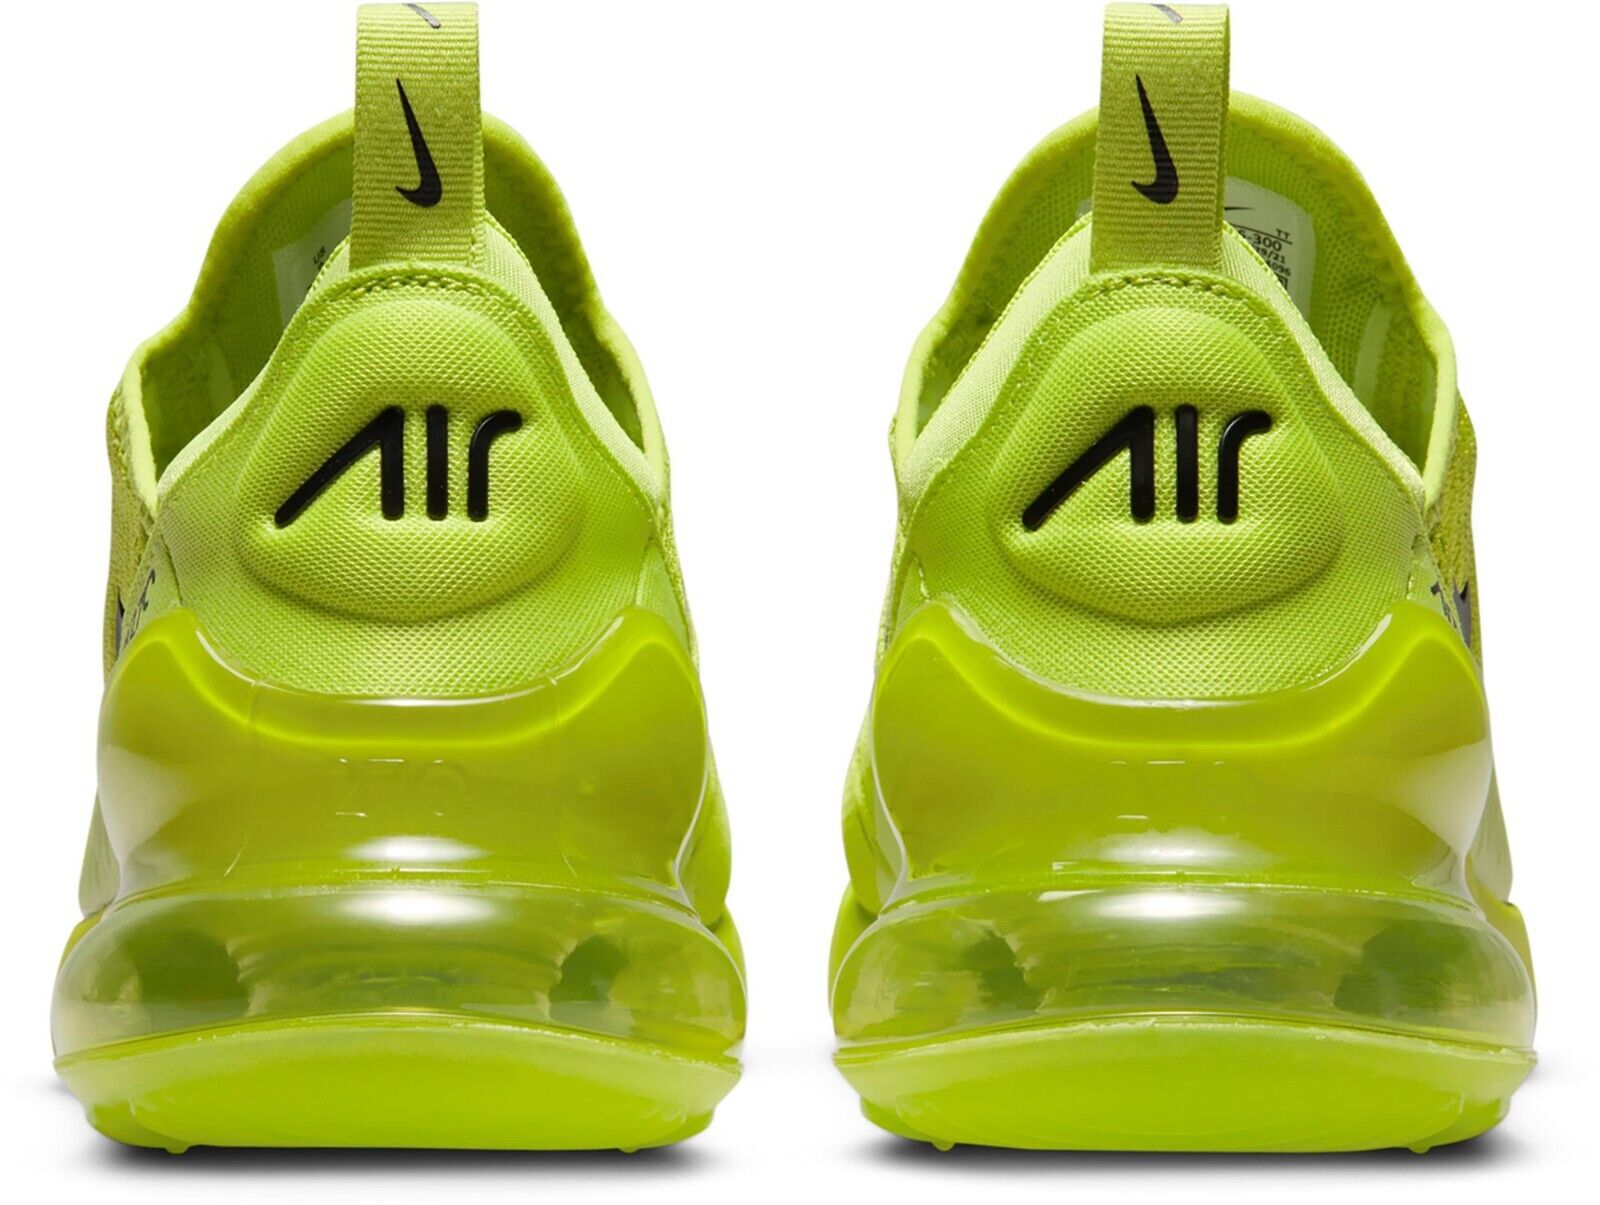 Nike Air Max 270 DV2226-300 Women's Atomic Green & Black Tennis Ball Shoes DDJJ9 (6) - image 4 of 5